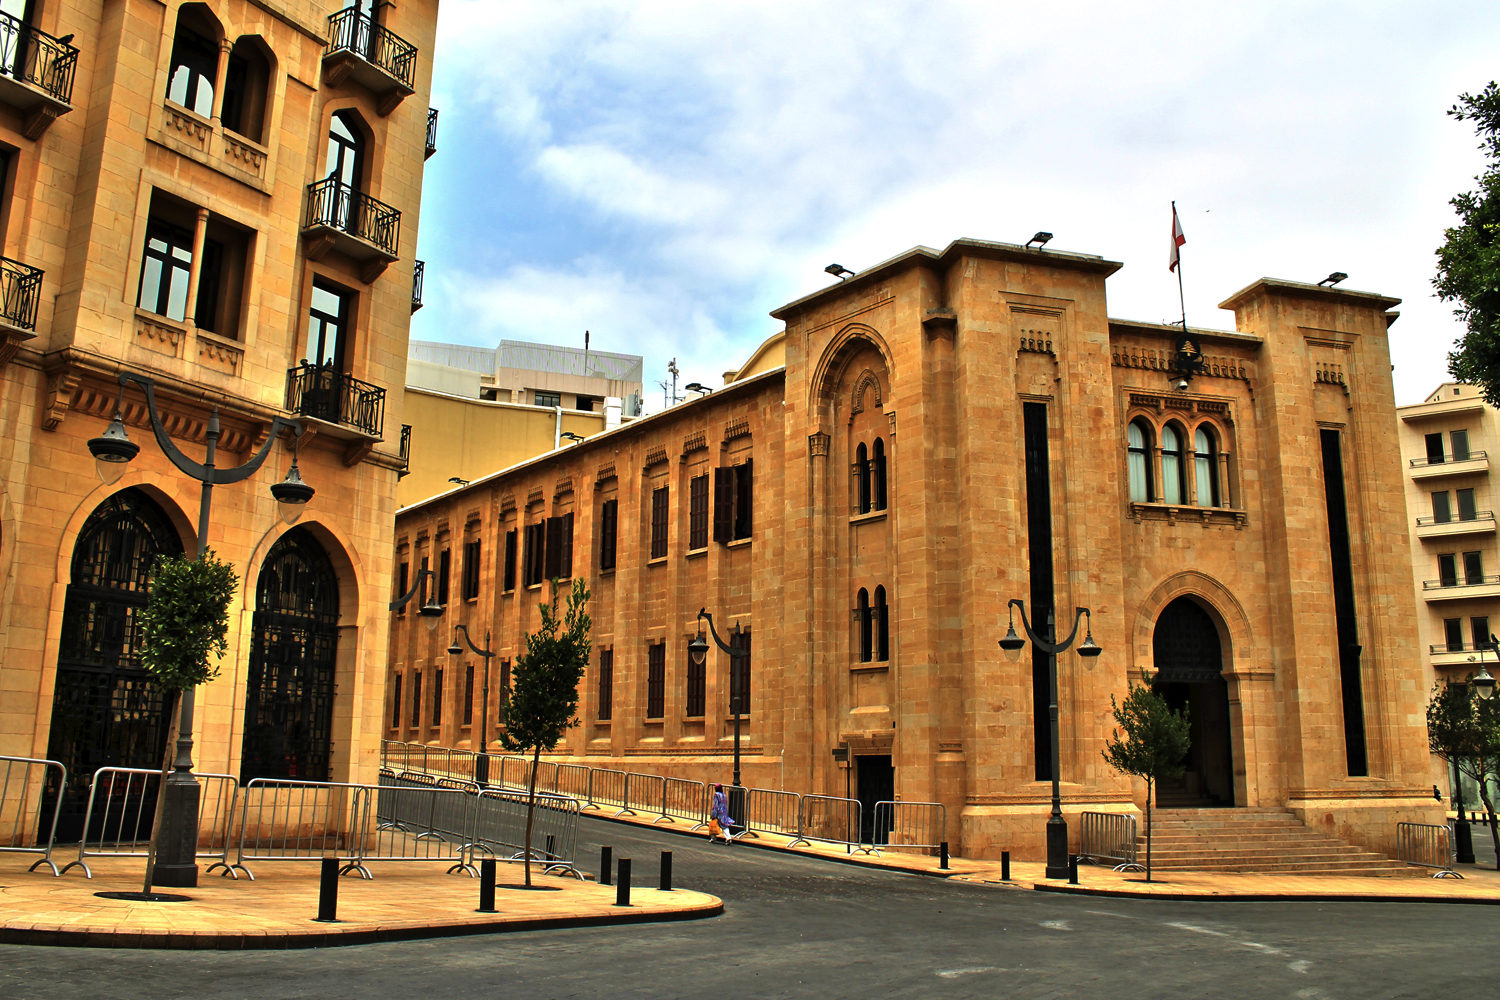 Das Parlament des Libanon in Beirut (Foto: rabiem22/Flickr - CC BY 2.0)